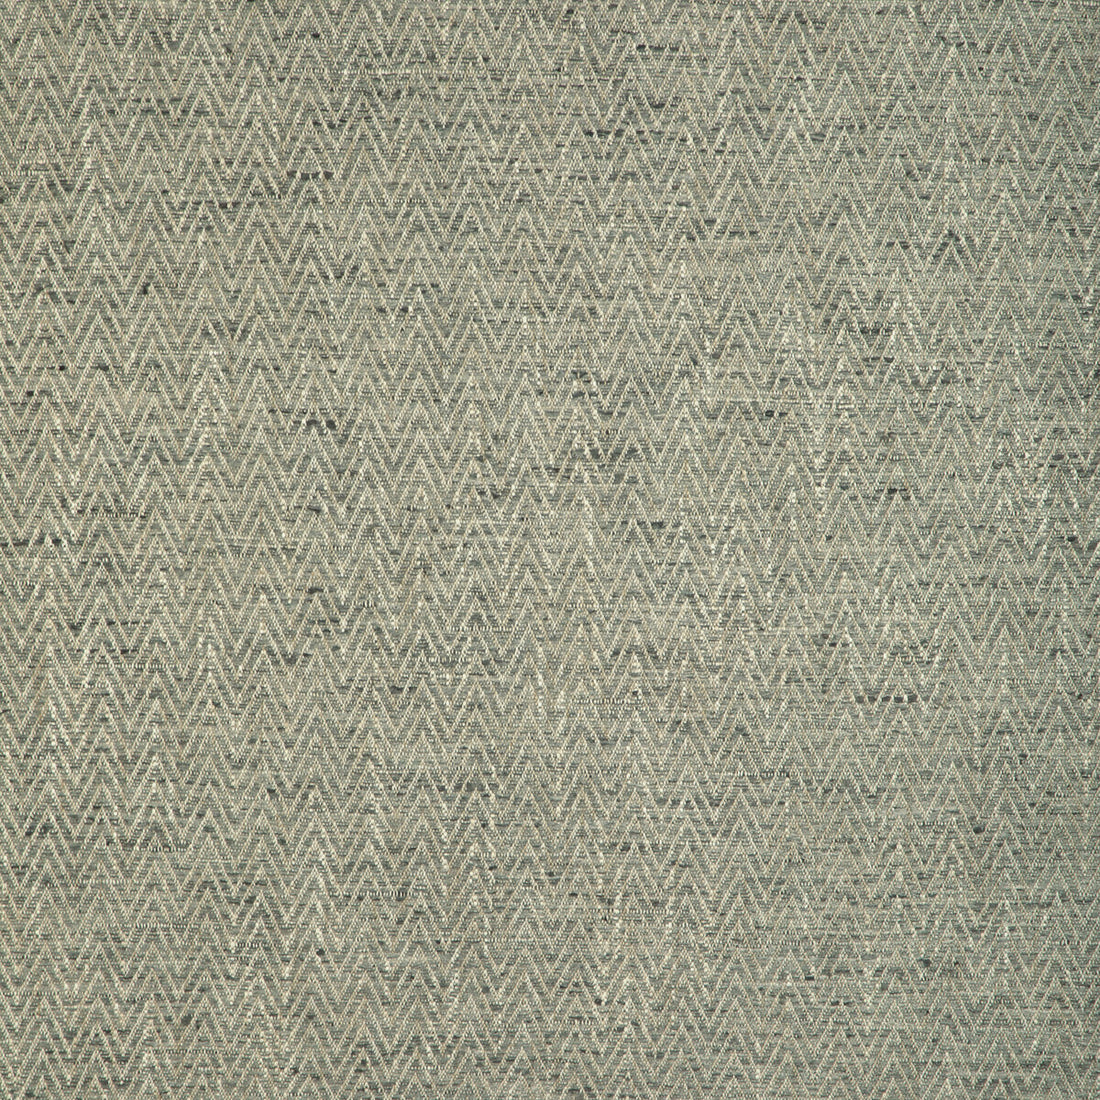 Kravet Smart fabric in 34092-1611 color - pattern 34092.1611.0 - by Kravet Smart